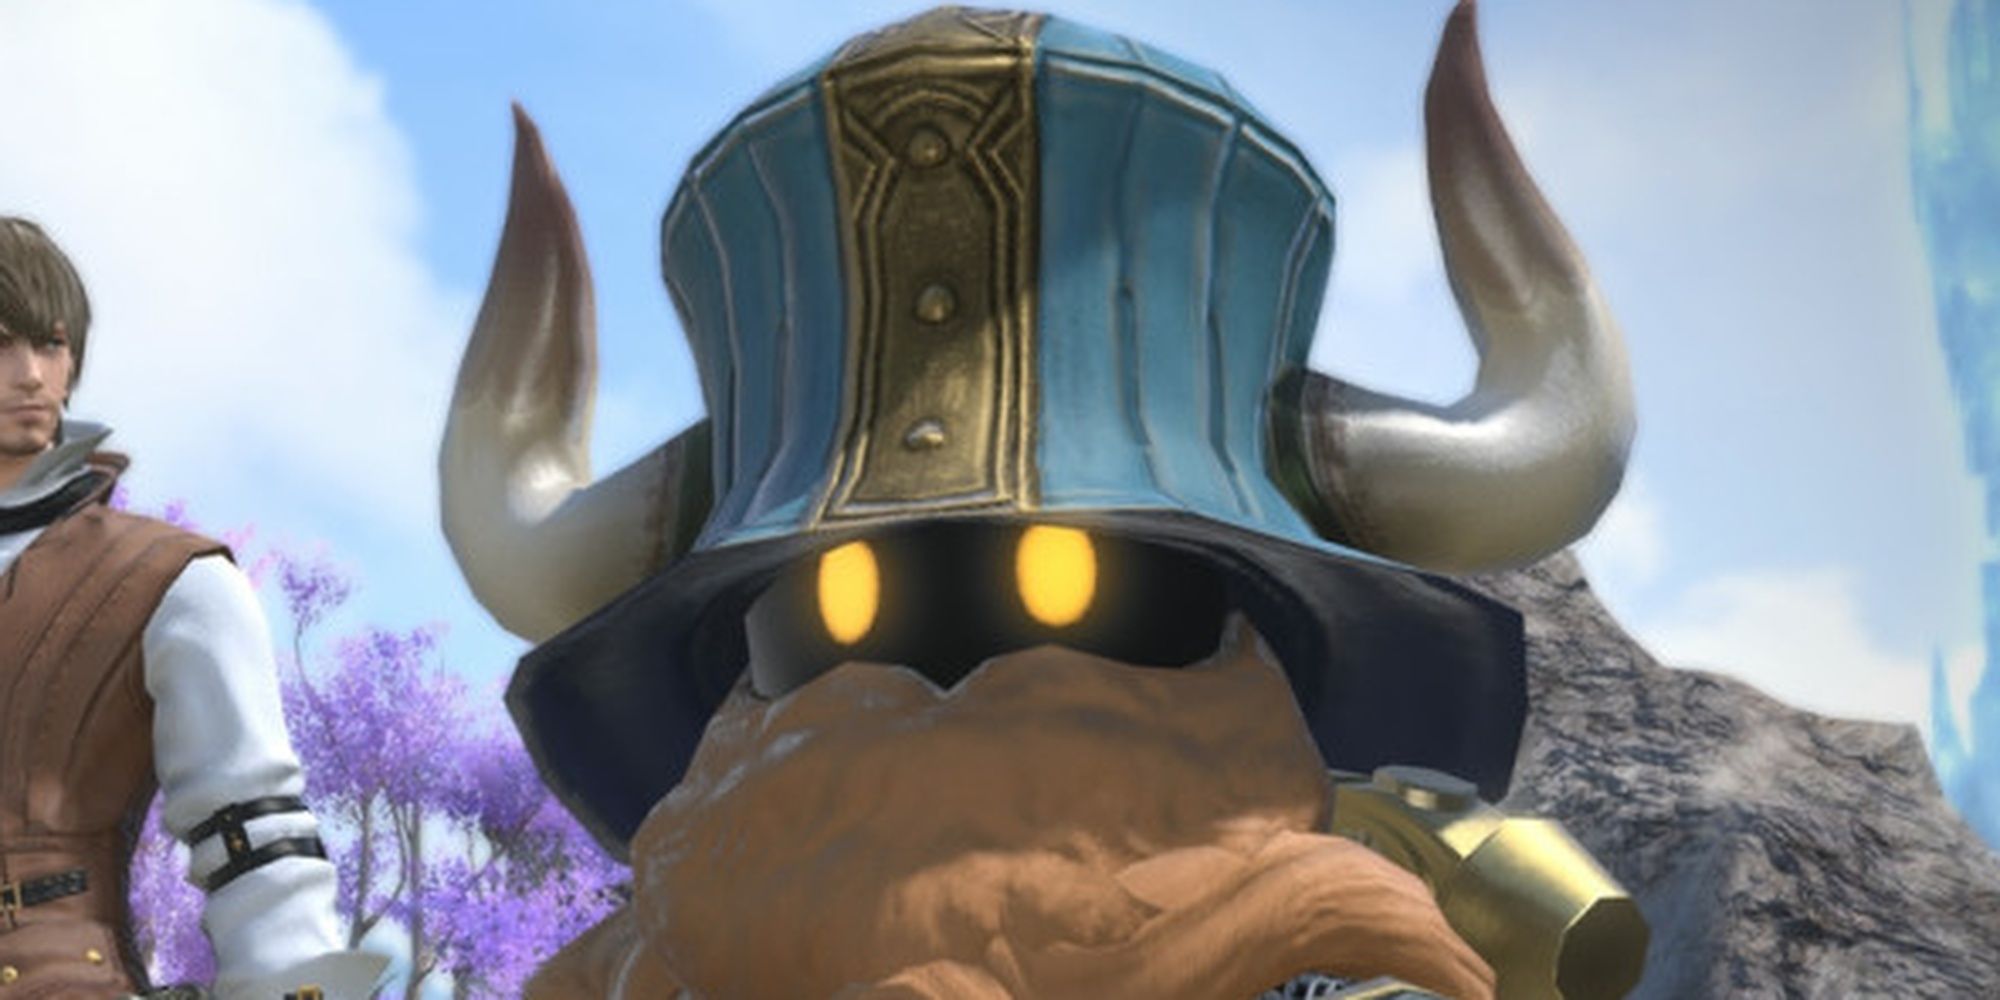 Final Fantasy 14 Dwarf In Blue Horned Helmet Against Blue Sky